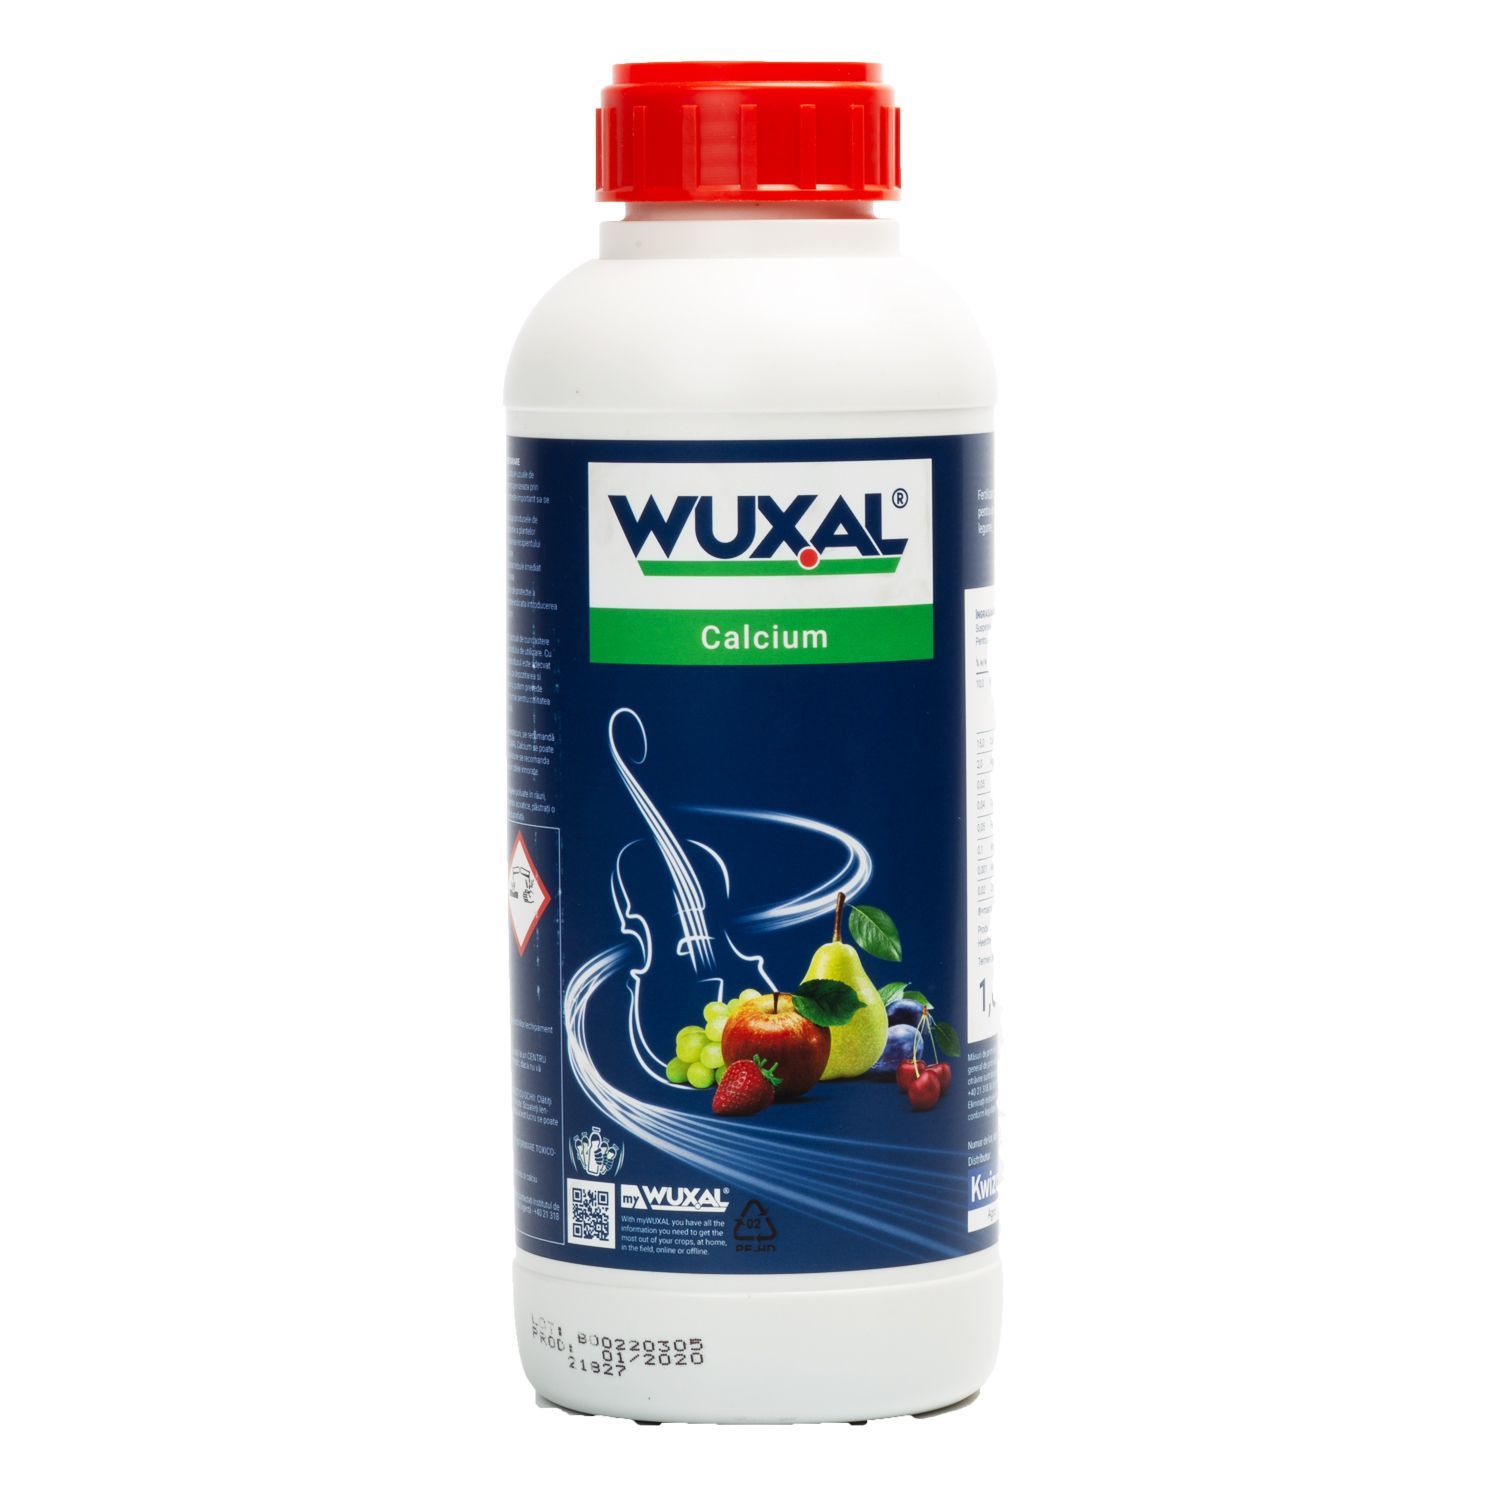 Wuxal calcium 1l 